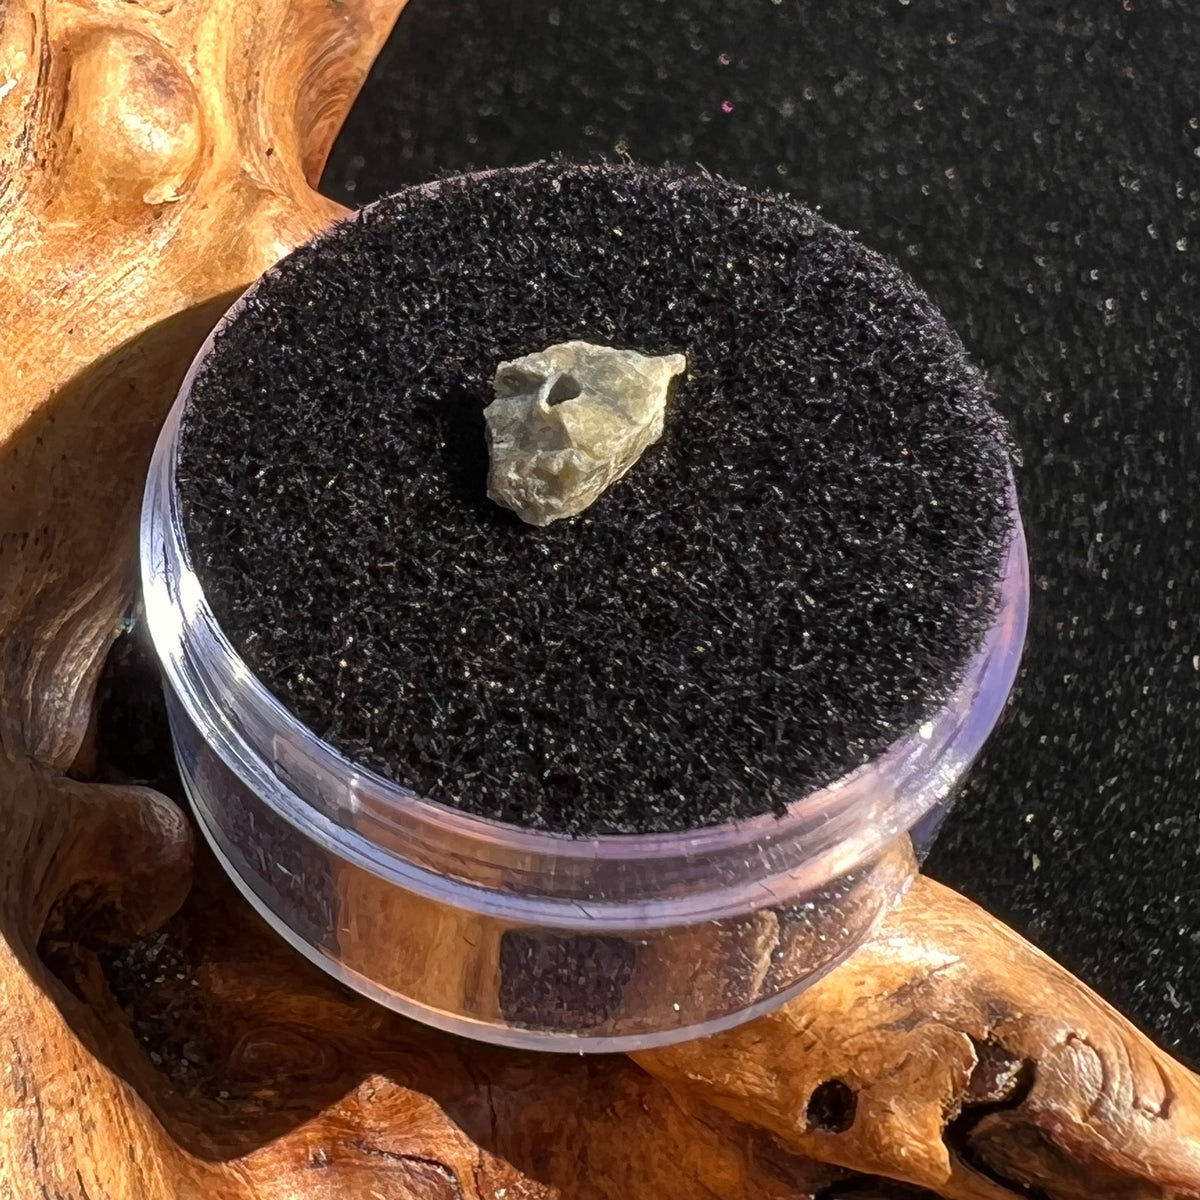 Tatahouine Meteorite Bead Natural #6-Moldavite Life